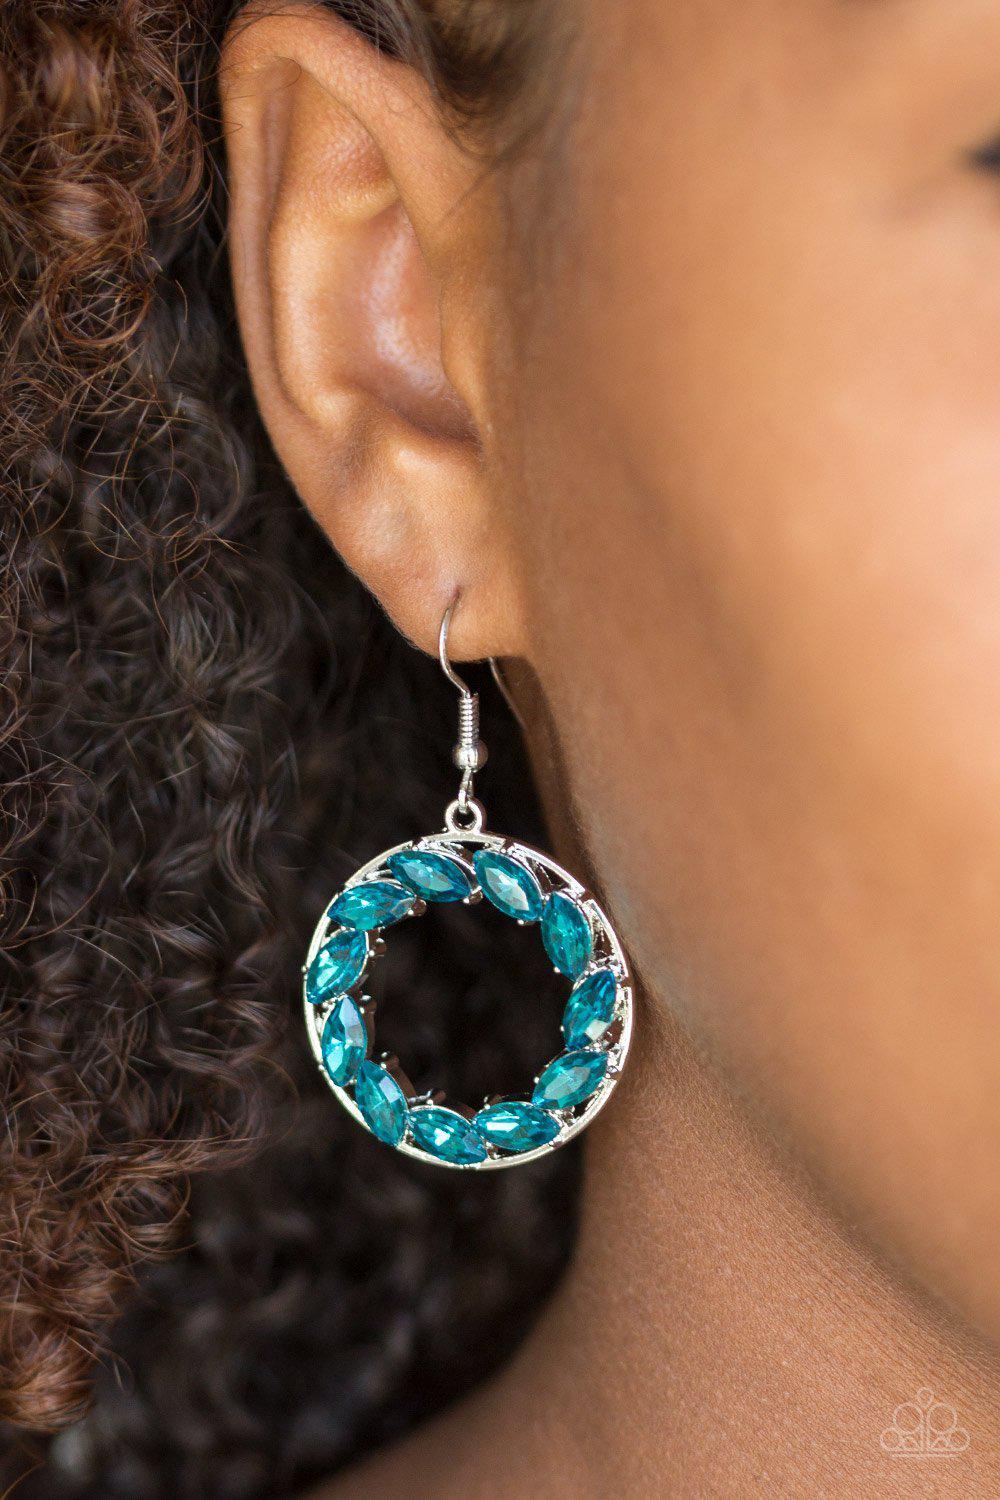 Global Glow Blue Rhinestone Earrings - Paparazzi Accessories-CarasShop.com - $5 Jewelry by Cara Jewels